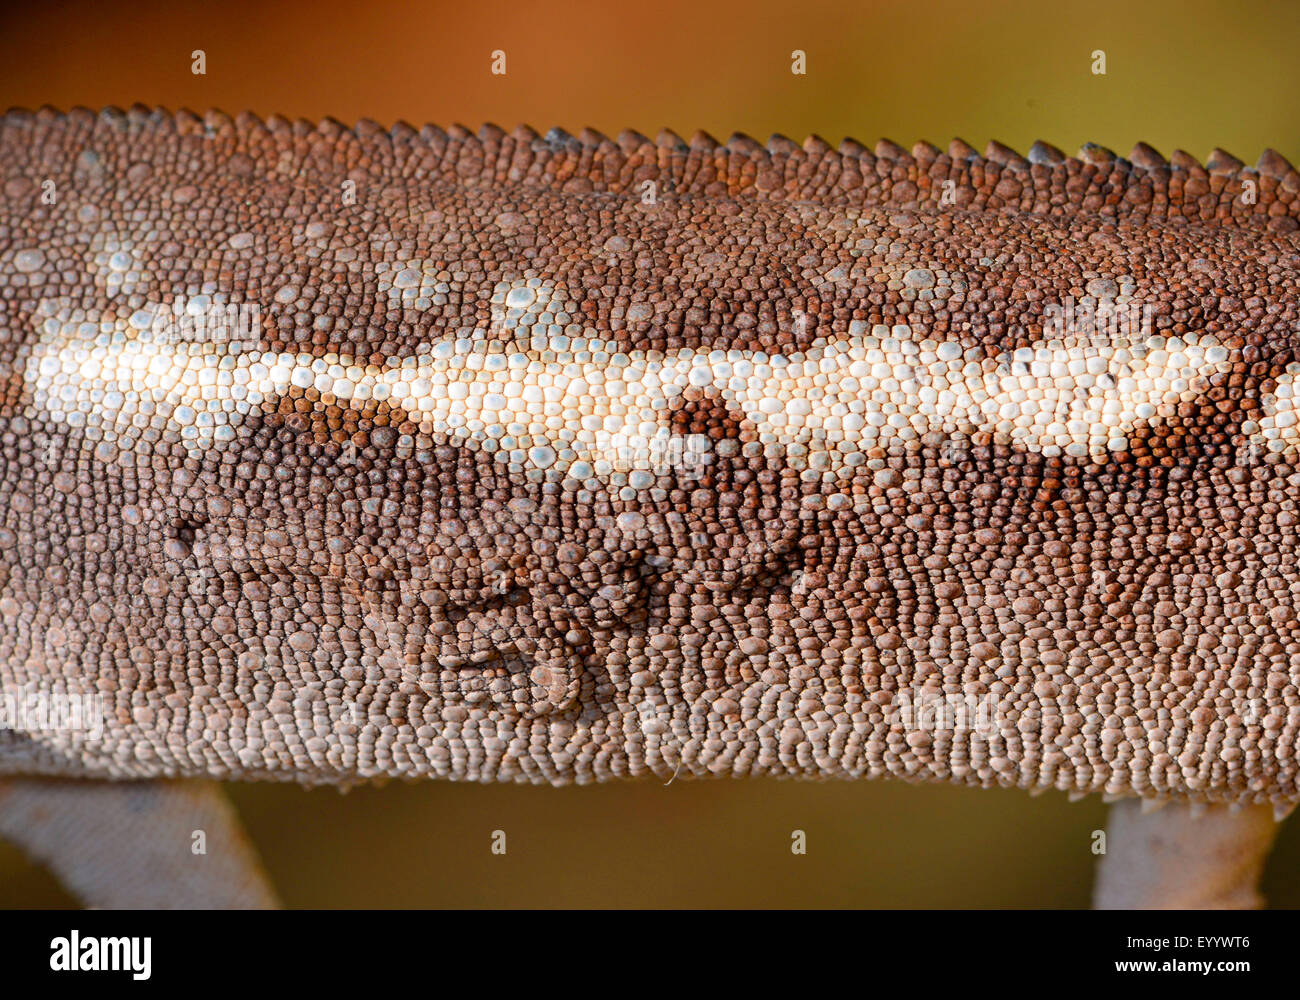 Pantherchamäleon (Furcifer Pardalis, Chamaeleo Pardalis), der Wurm von einem Panther Cahmeleon, Madagaskar, Ankifi Haut Stockfoto